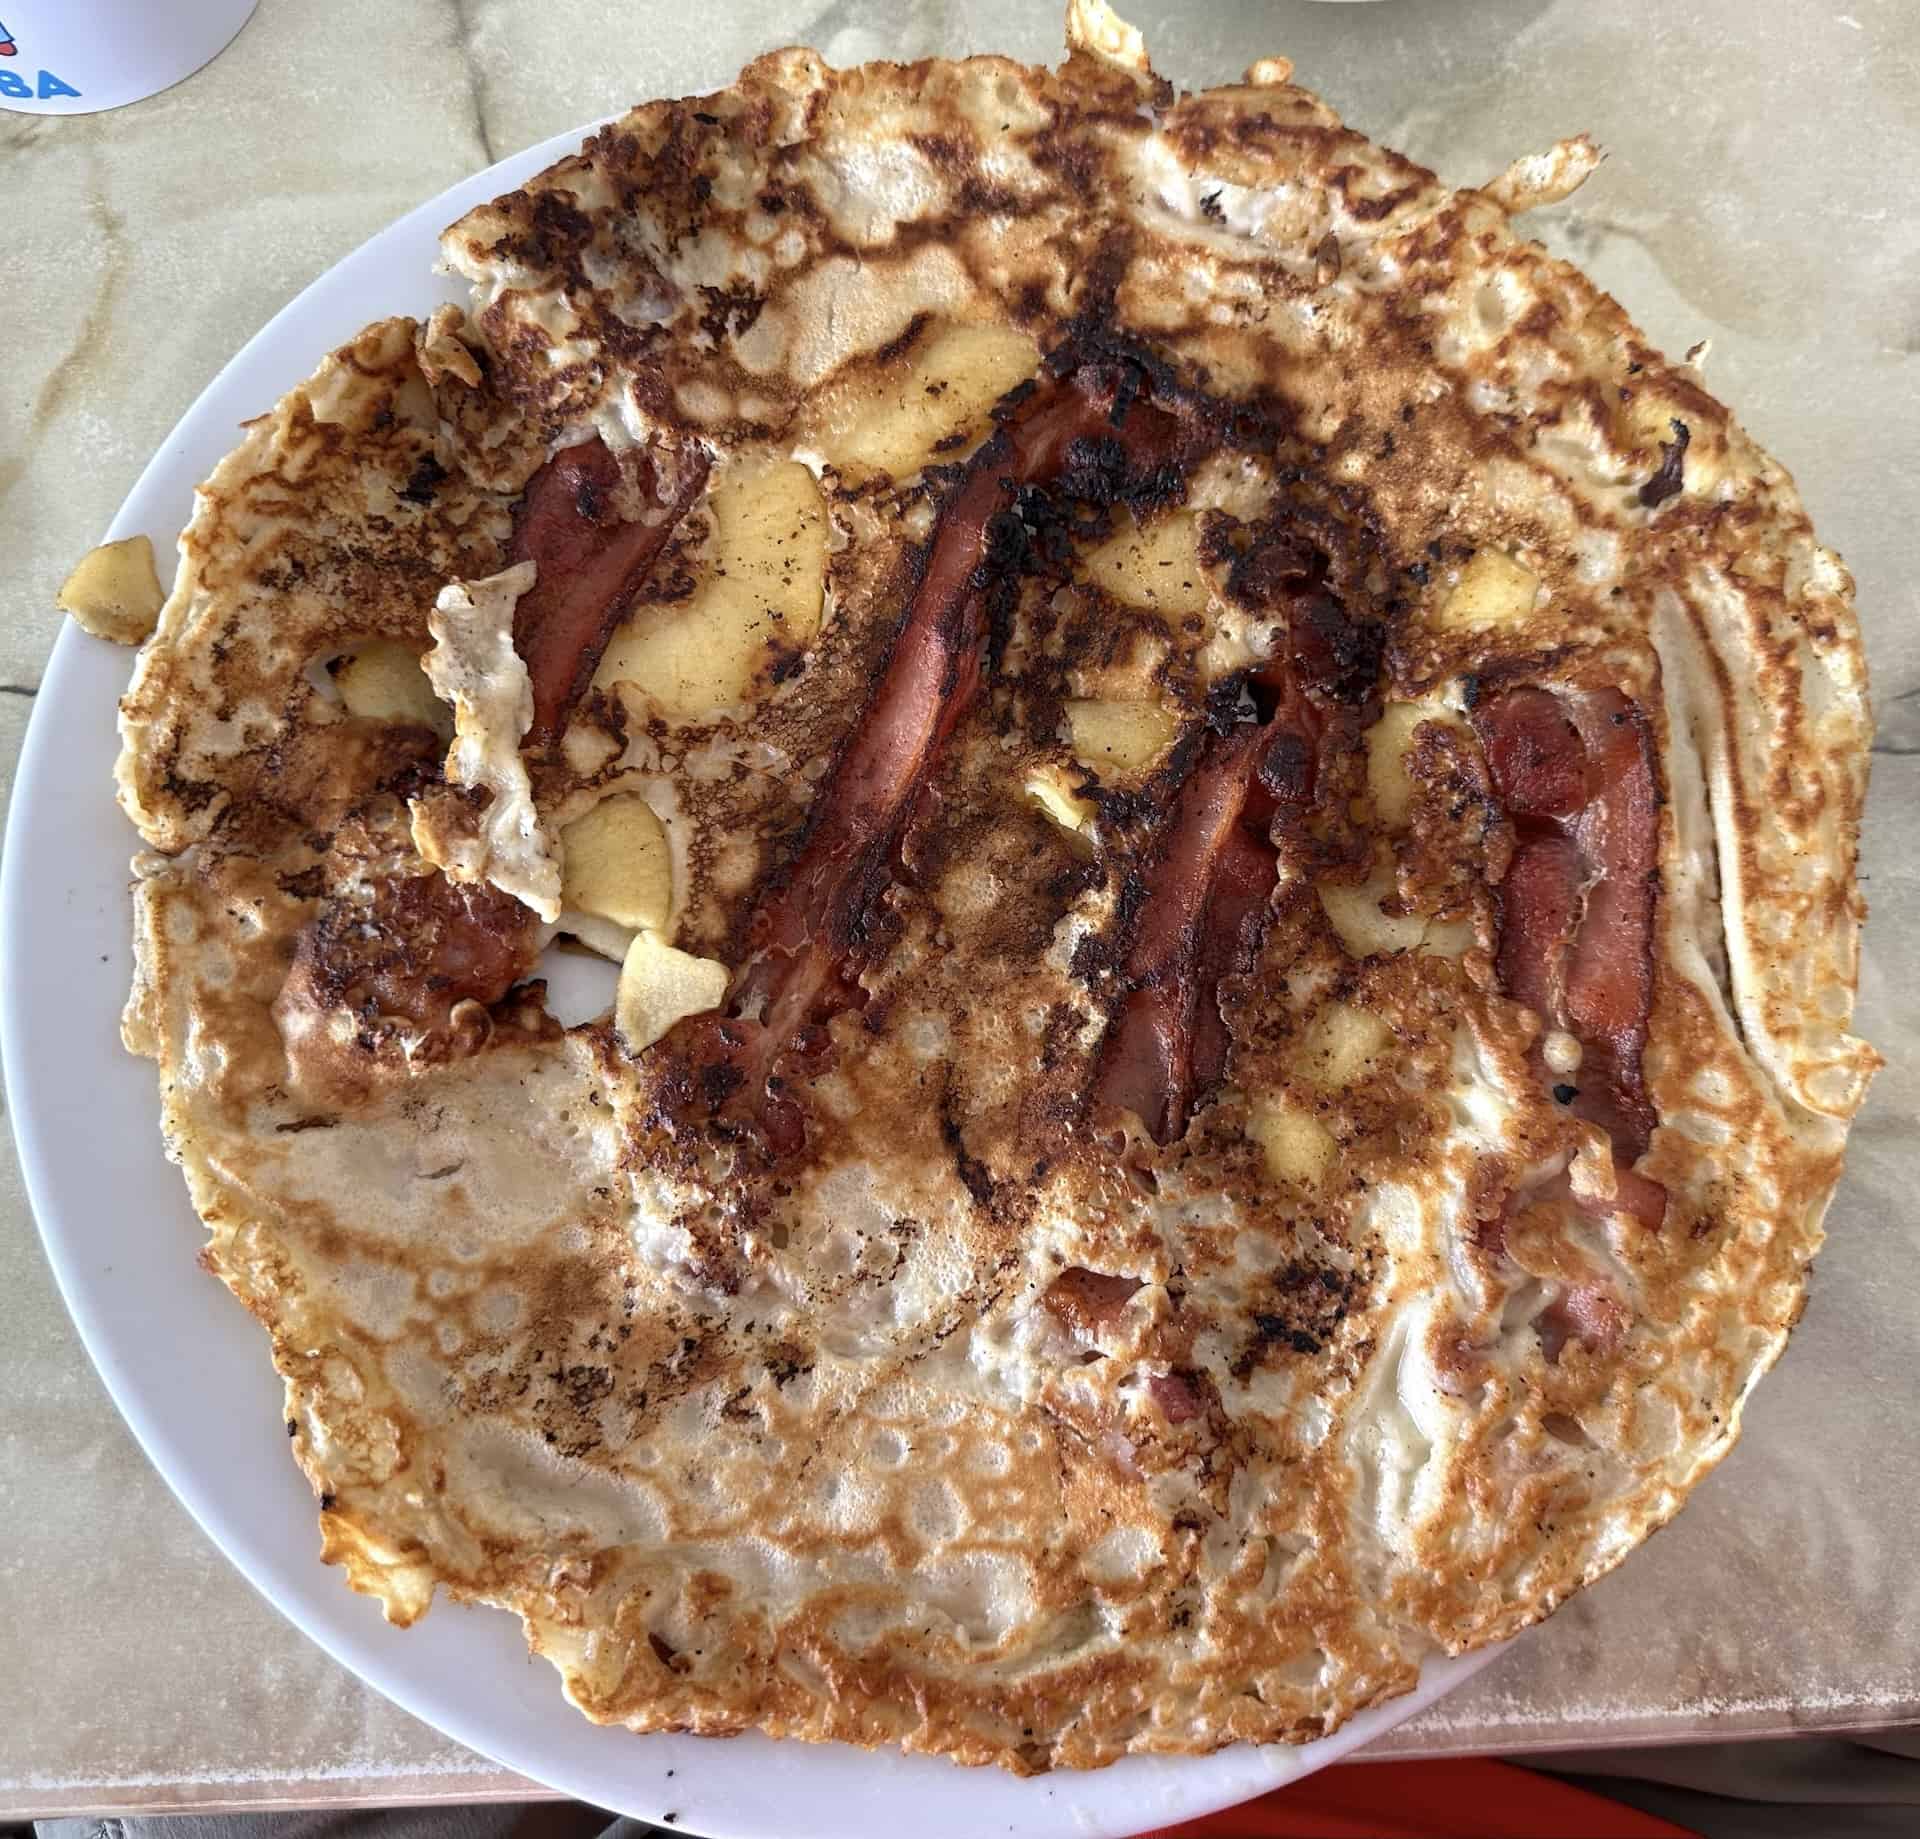 Bacon and apple pancake at Linda's Dutch Pancakes in Palm Beach, Noord, Aruba